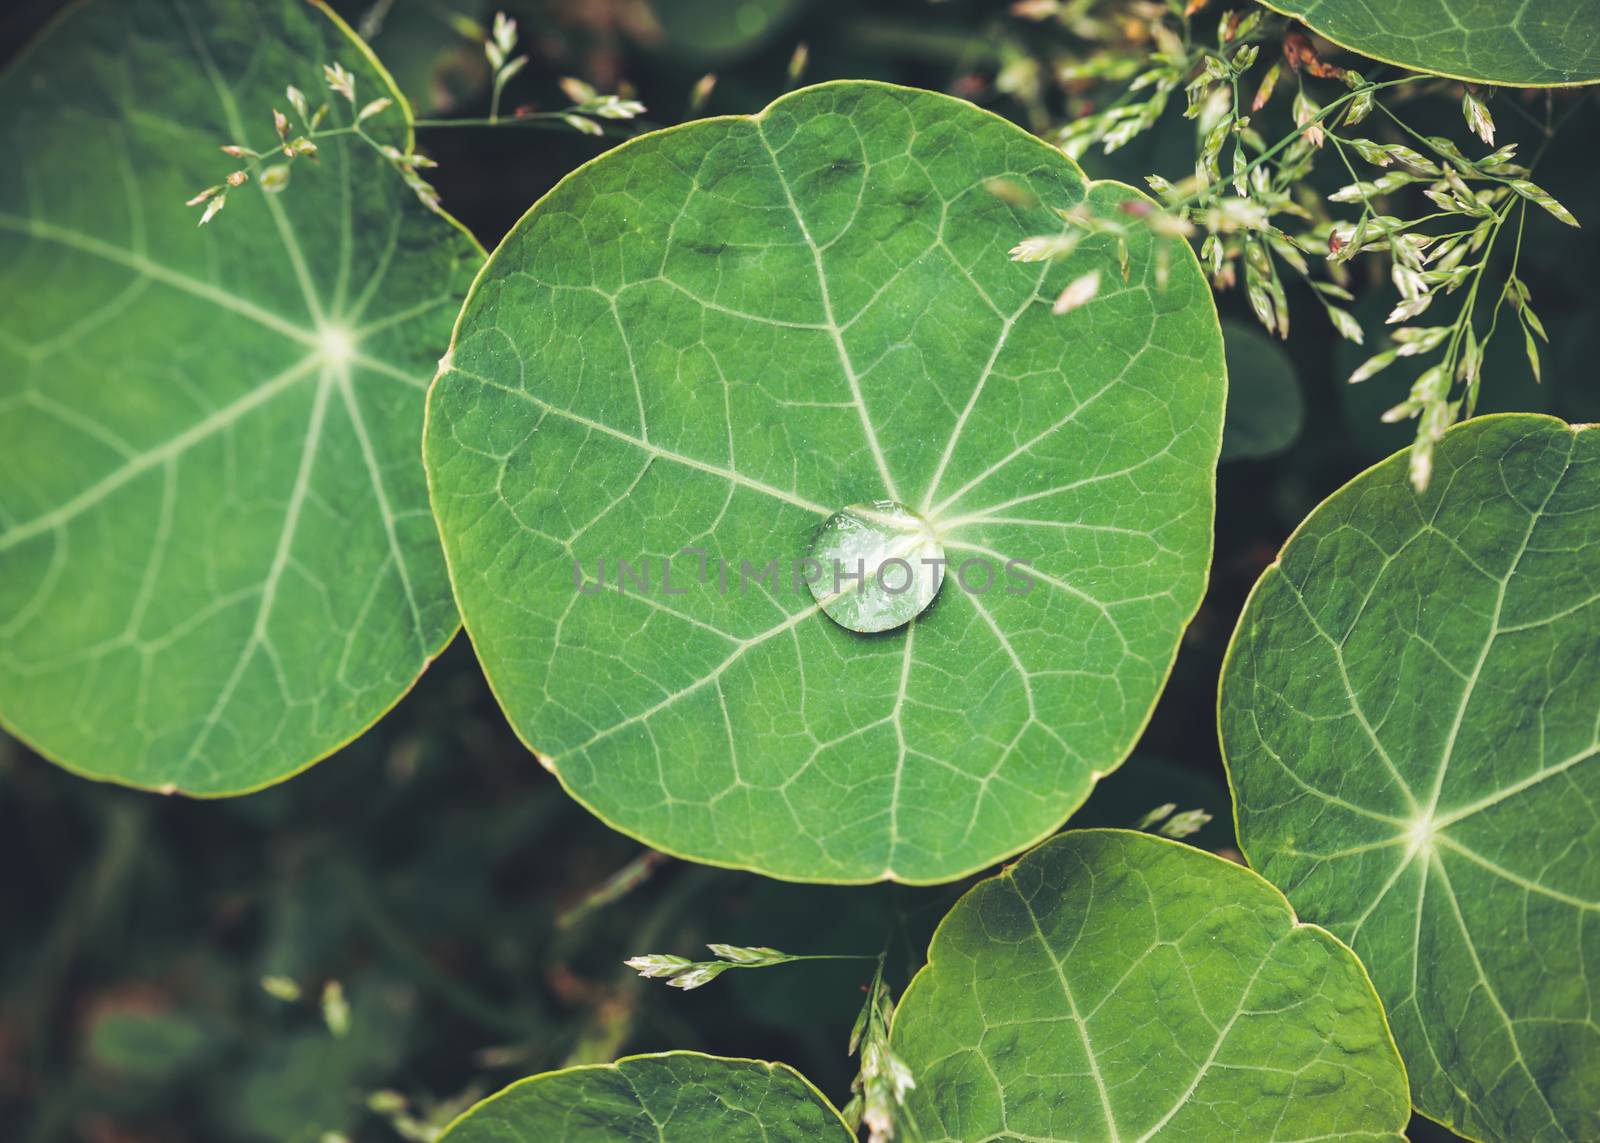 Water drop on nasturtium leaf by dutourdumonde